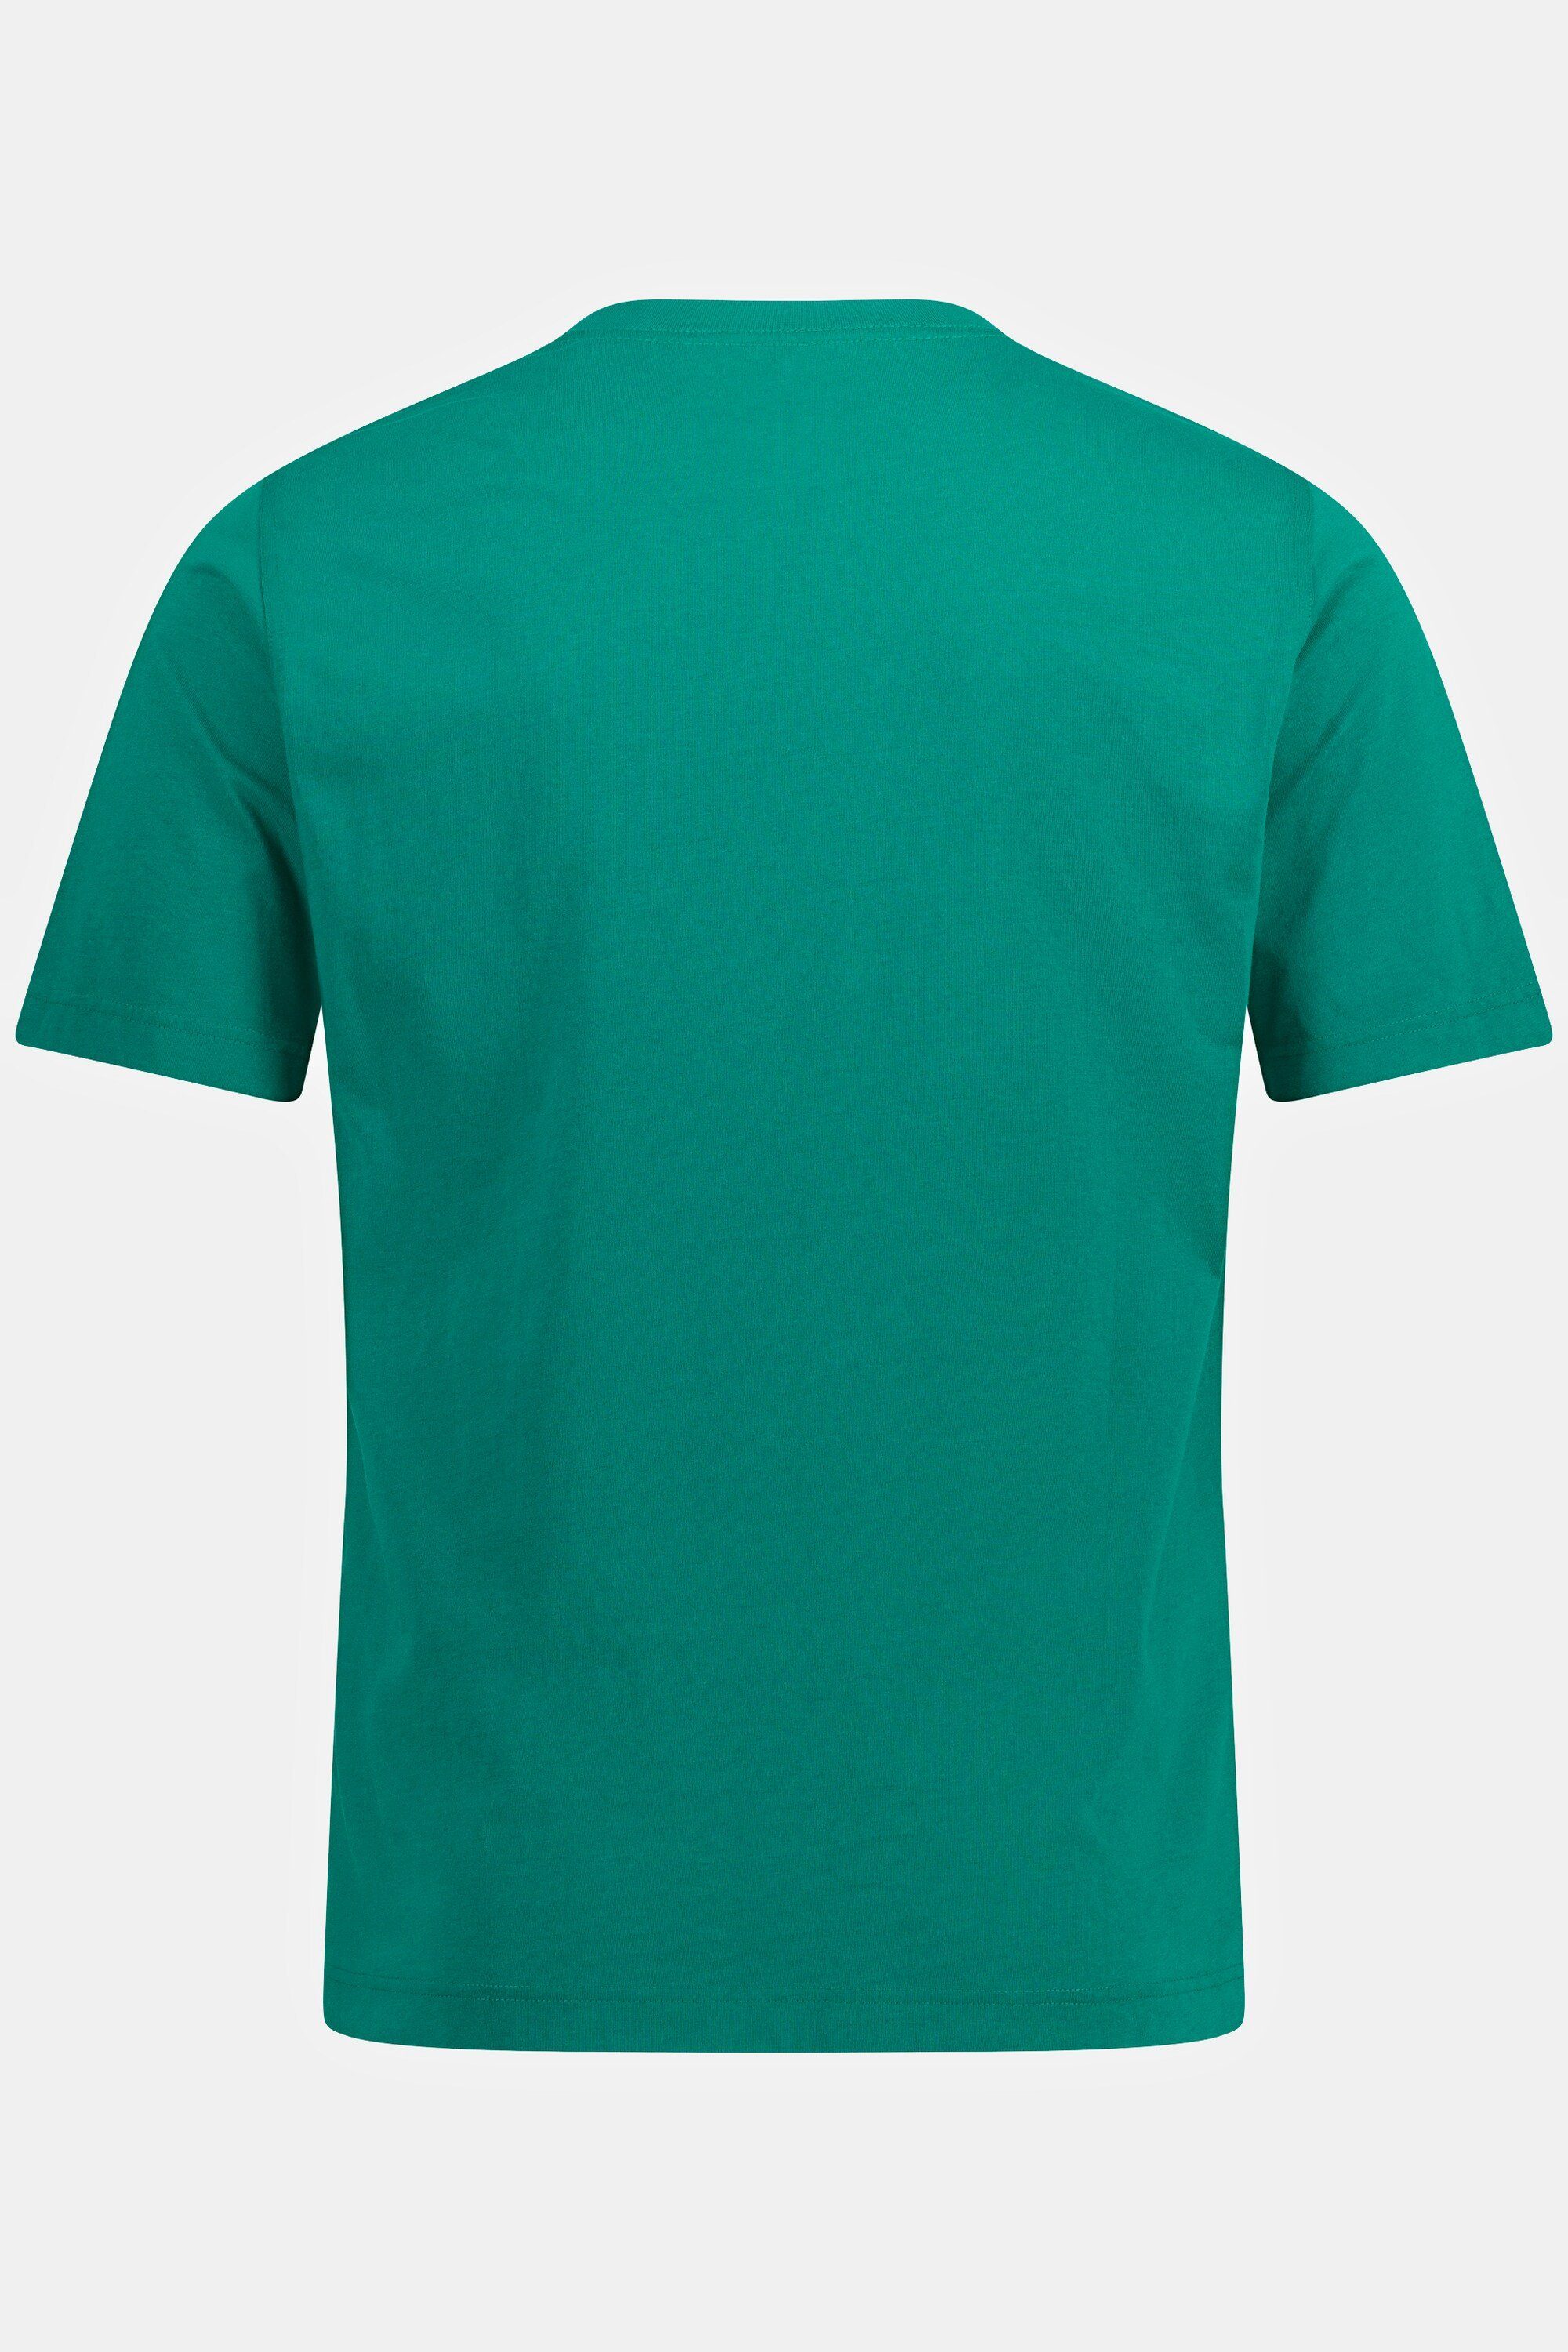 flaschengrün Baumwolle T-Shirt JP1880 gekämmte T-Shirt 8XL Rundhals bis Basic